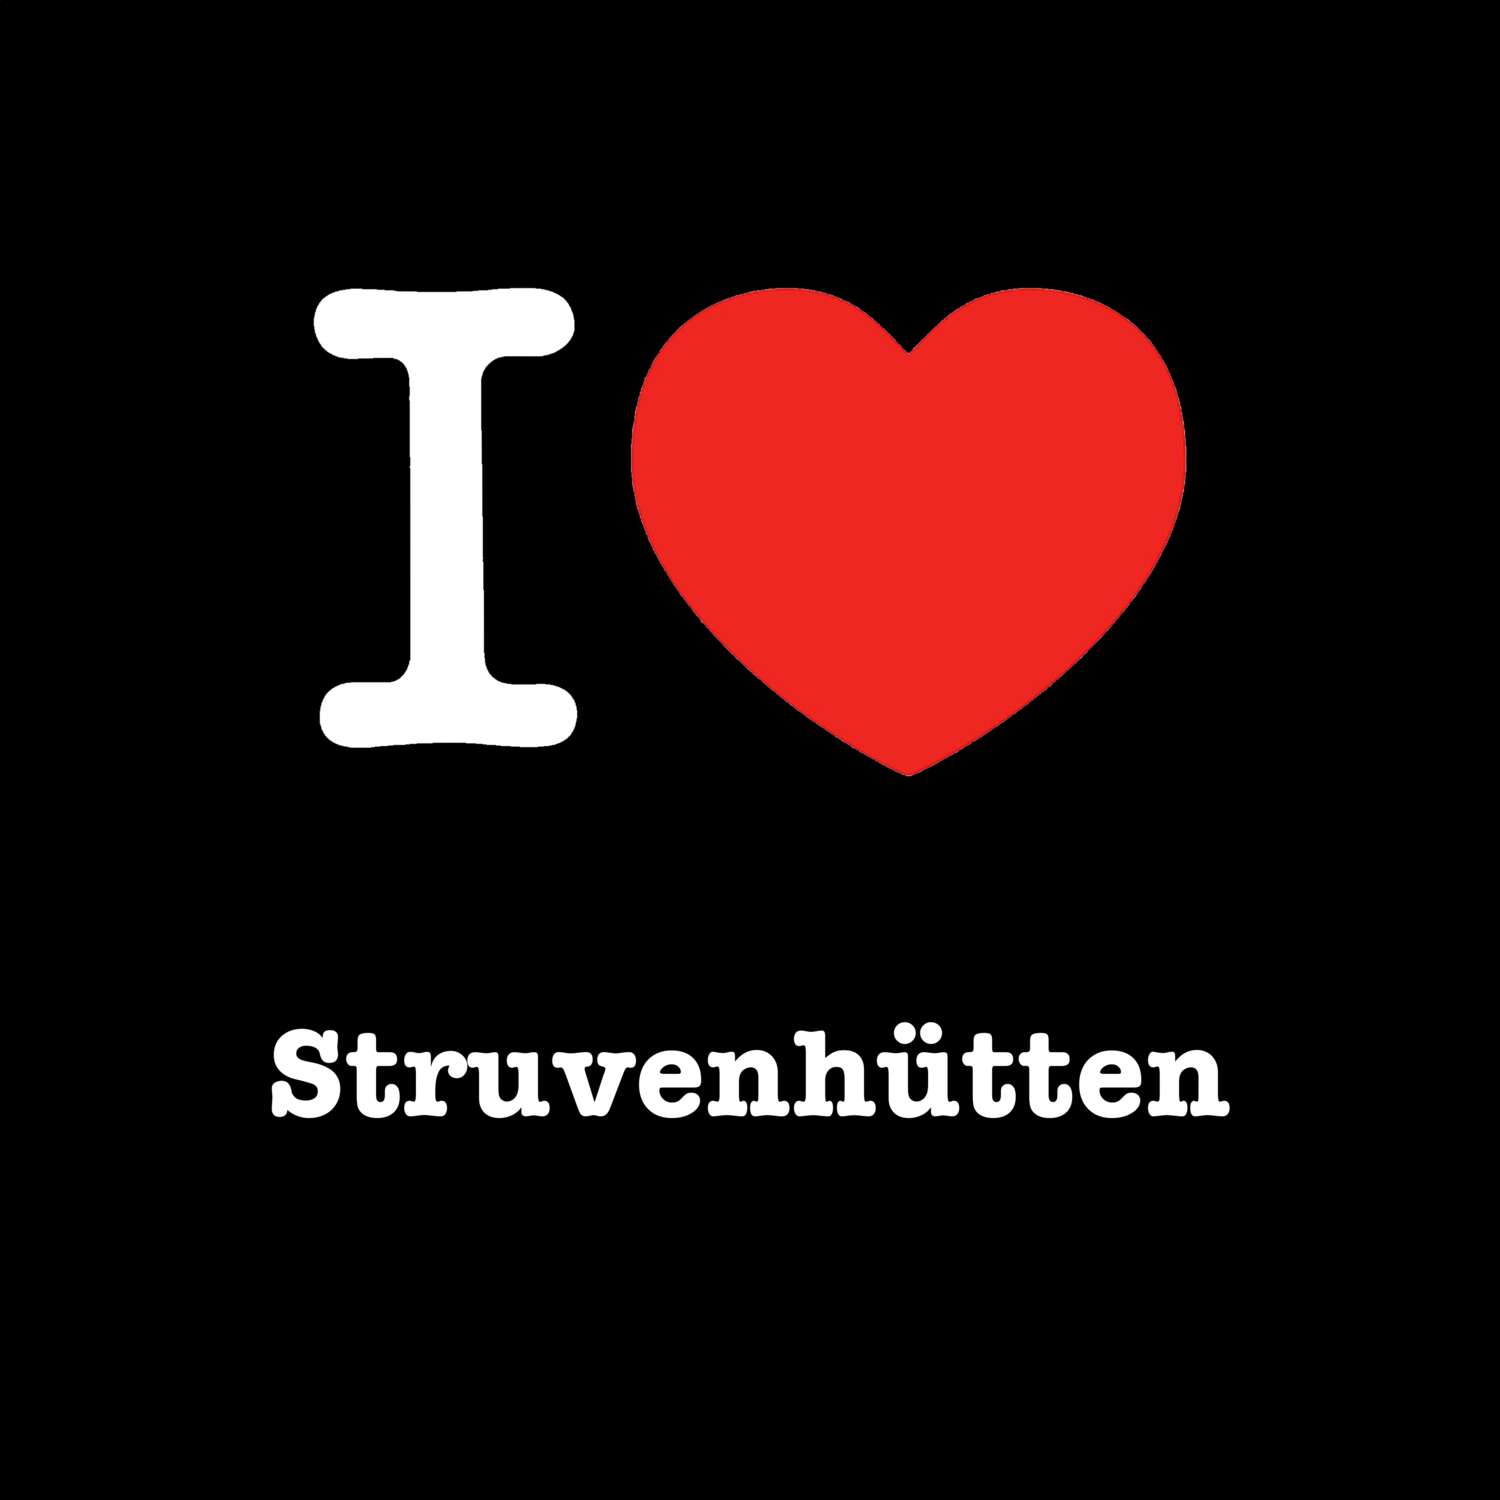 Struvenhütten T-Shirt »I love«